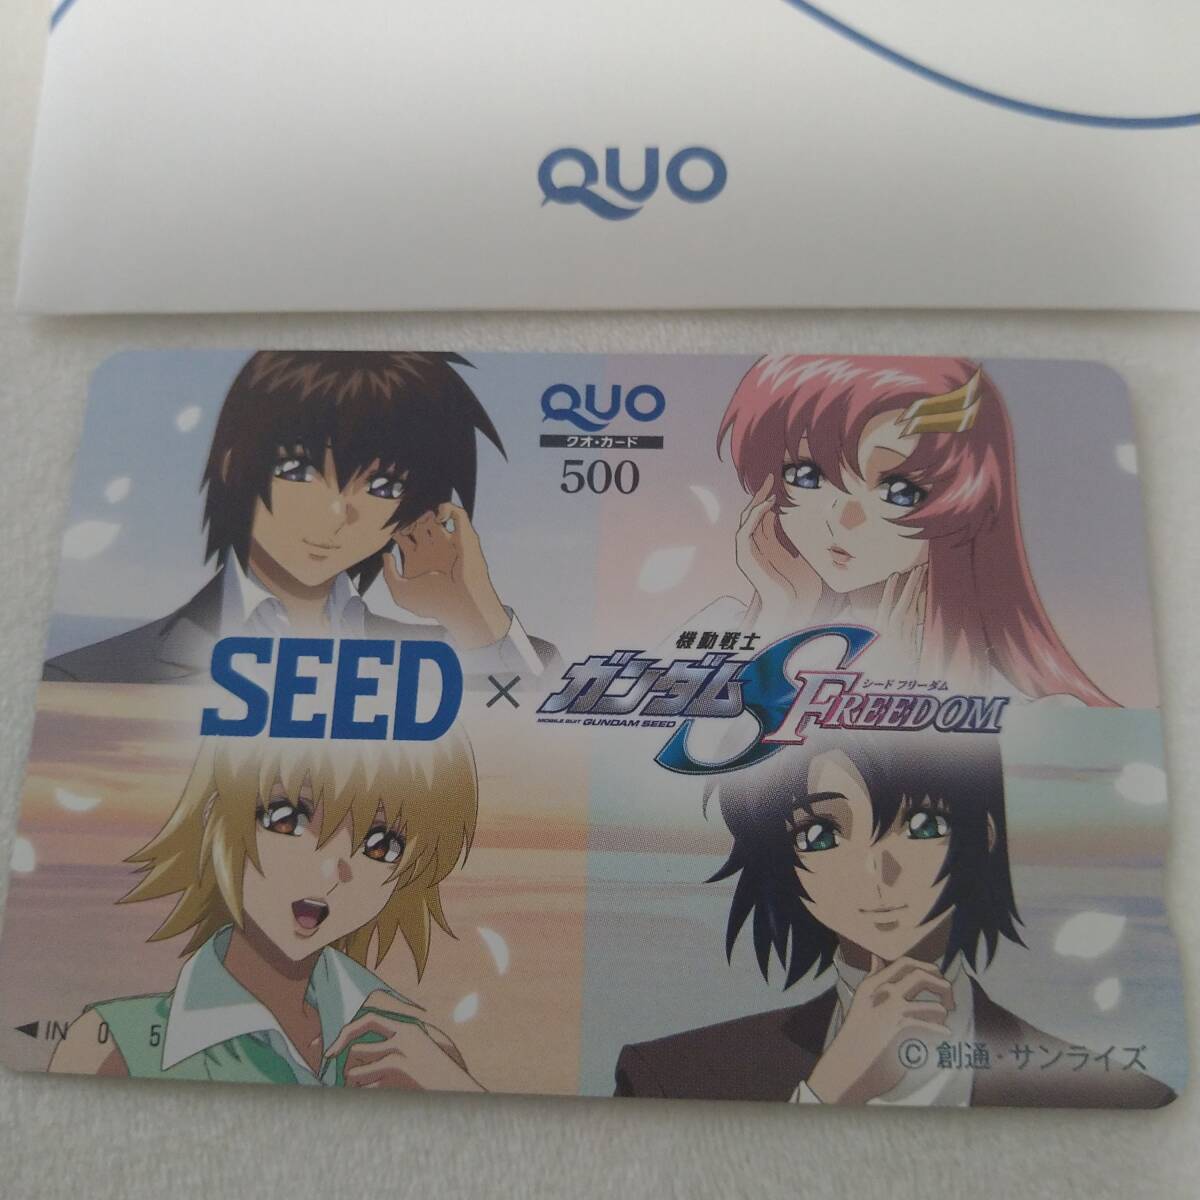  Mobile Suit Gundam S FREEDOM SEED Contact сотрудничество оригинал QUO карта не использовался 